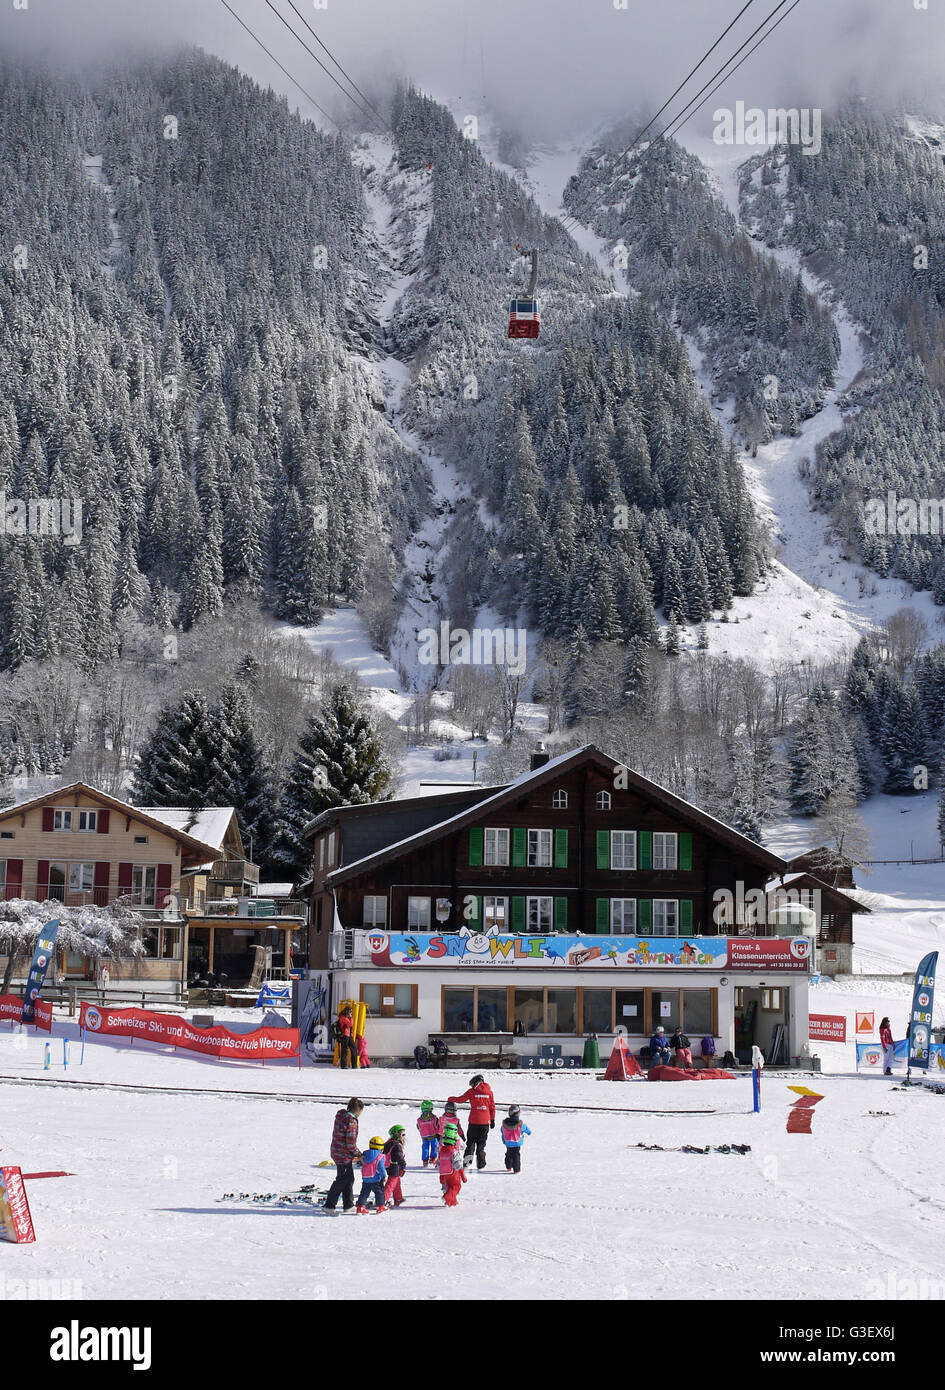 Ski school for children in the mountain village of Wengen, Switzerland  Stock Photo - Alamy